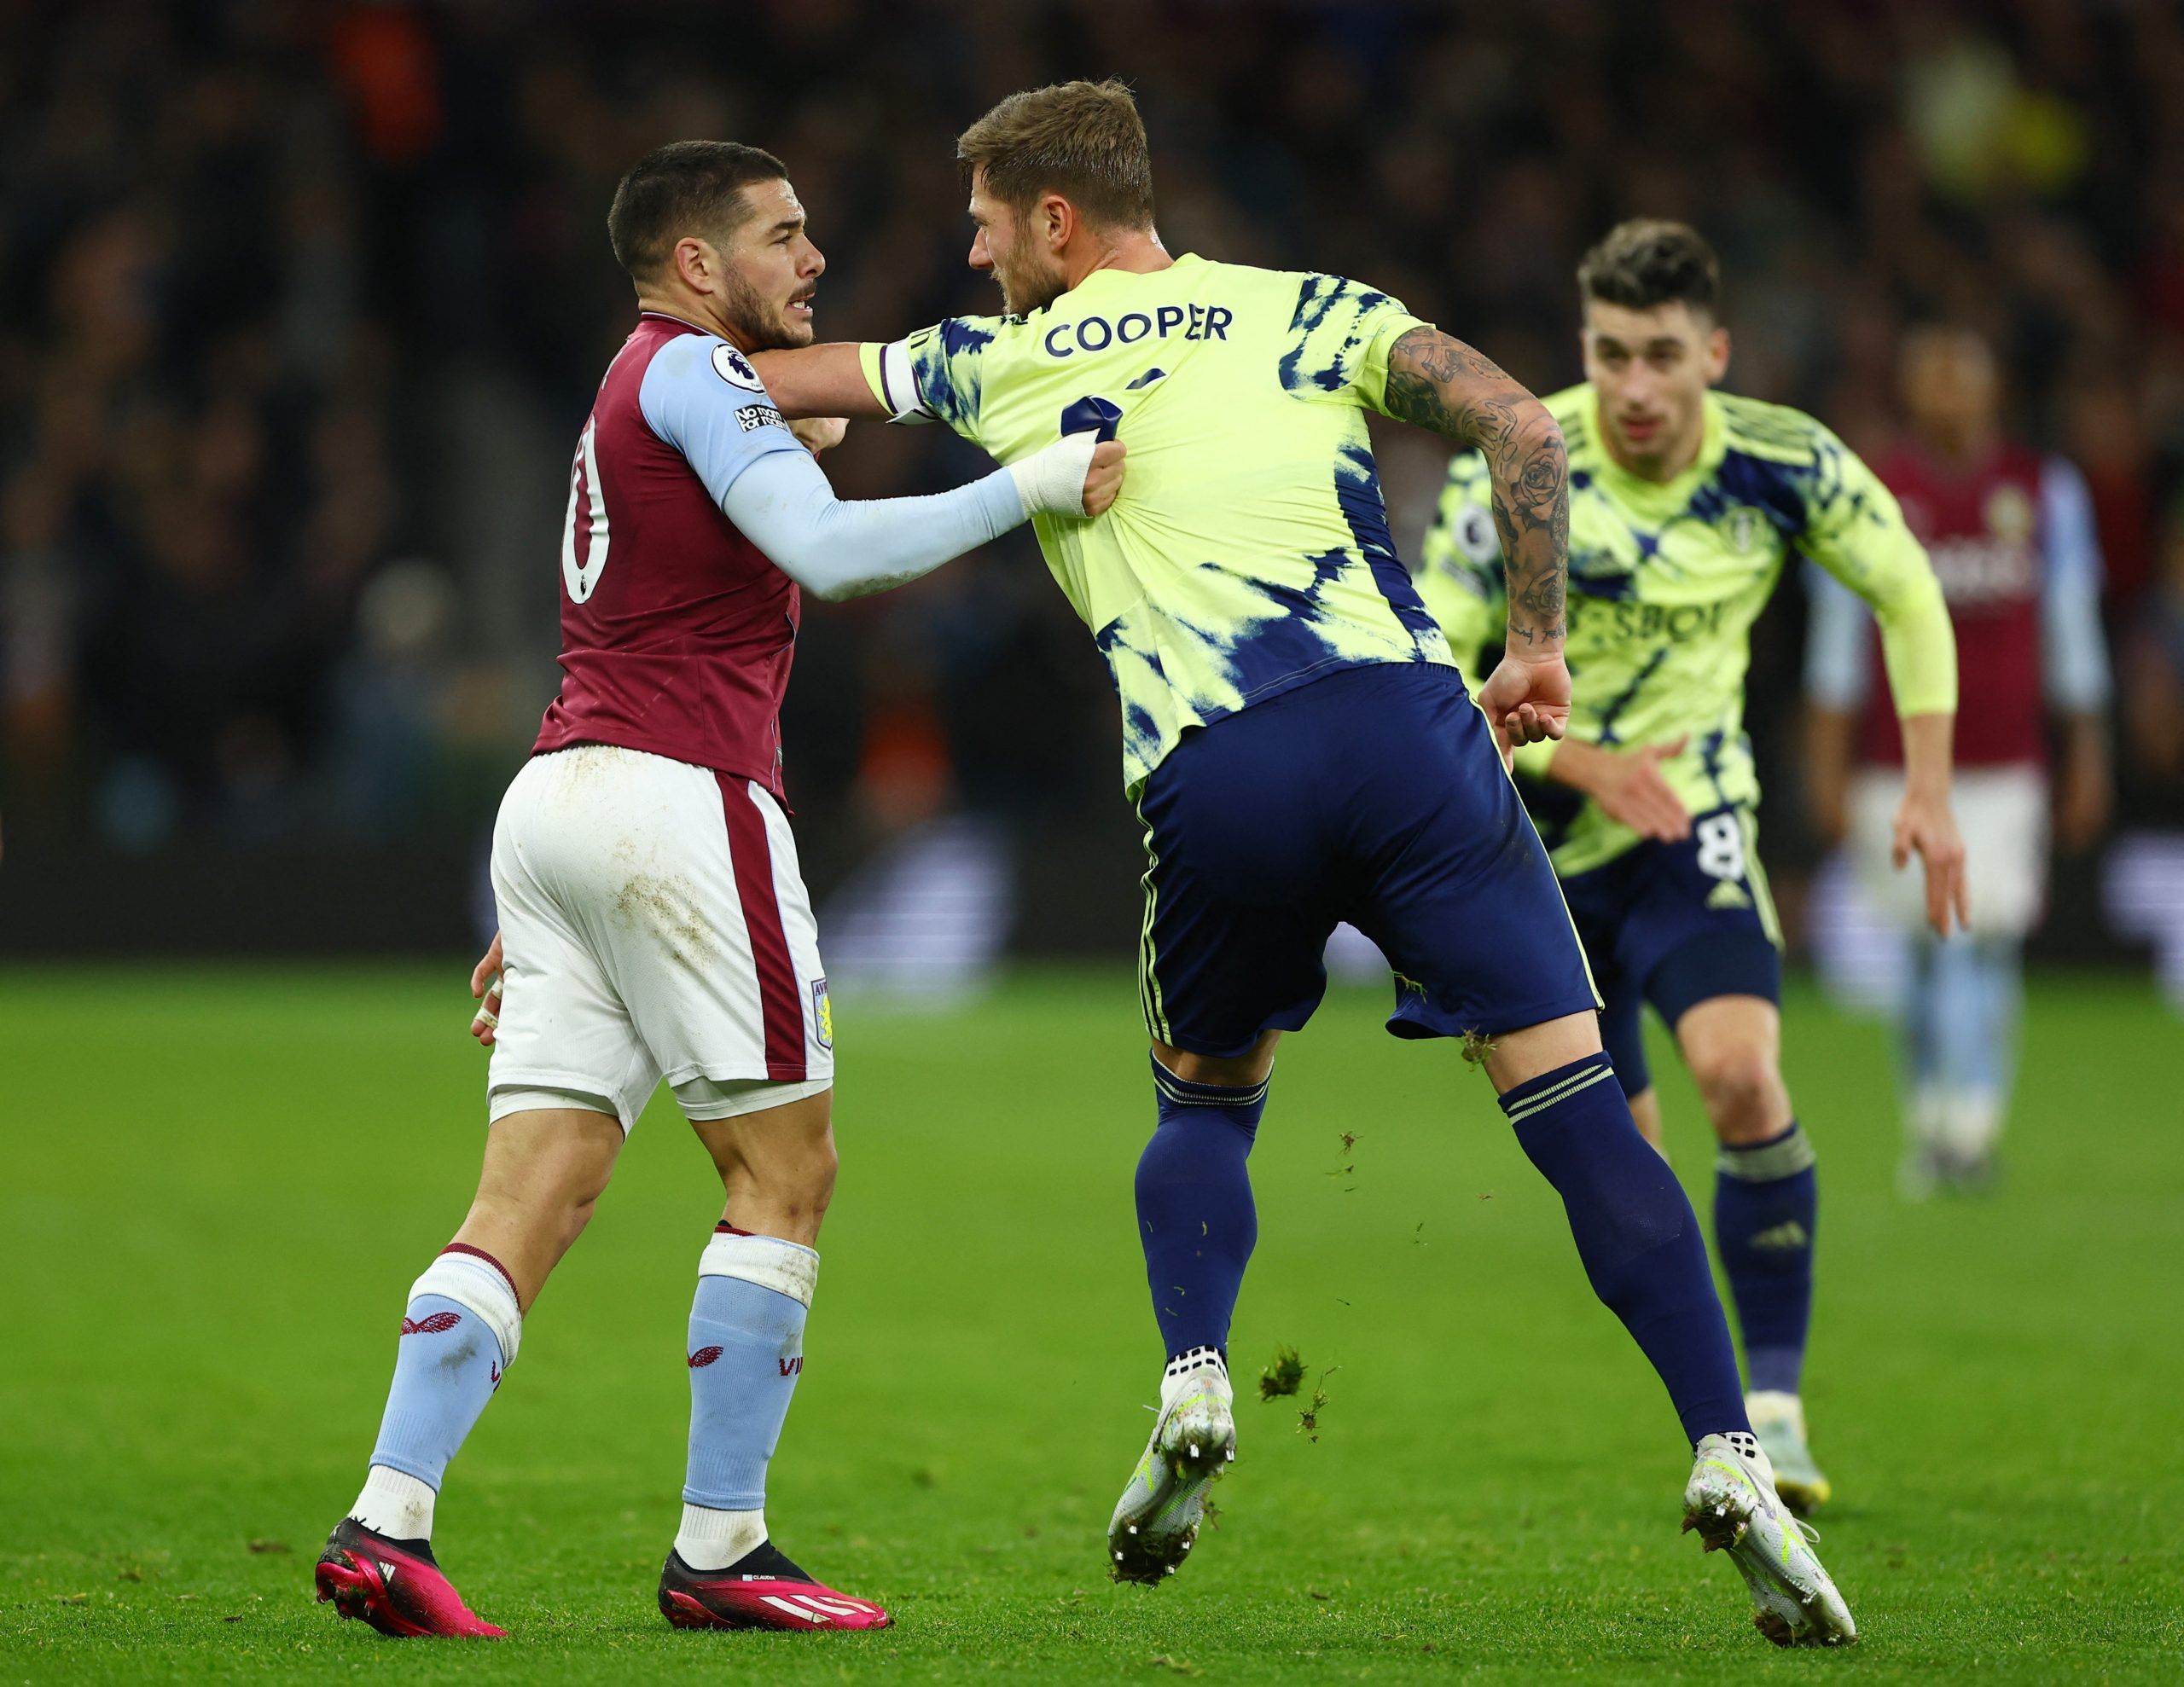 Aston Villa's Emiliano Buendia clashes with Leeds United's Liam Cooper